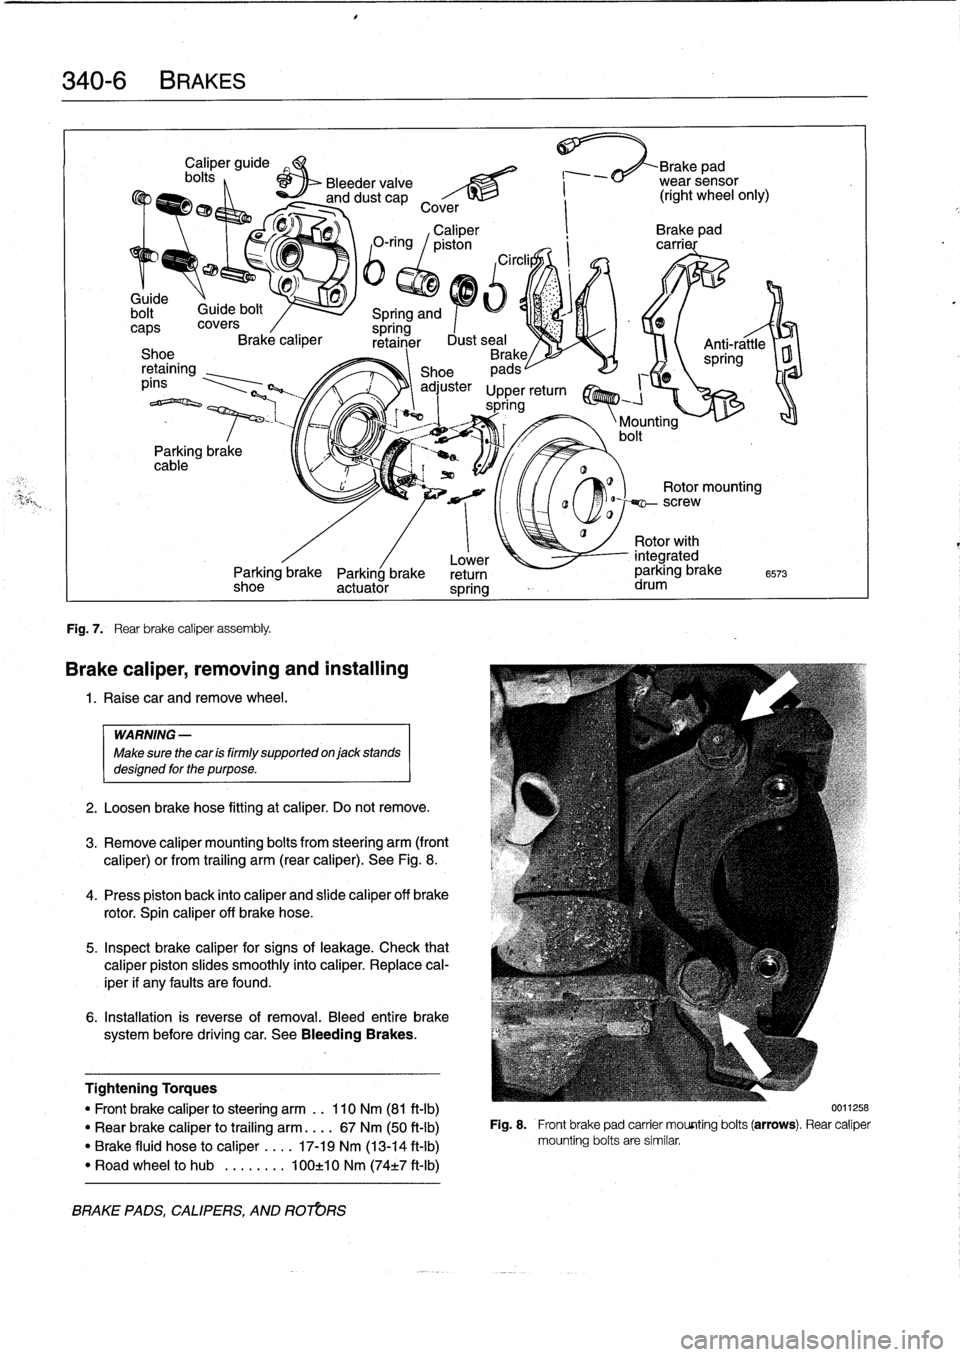 BMW 328i 1998 E36 Owners Manual 
340-
6BRAKES

bolt~

	

Guide
bolt

caps
covers
Brake
caliper
Shoe
retaining
píns

Parking
brake
cable

Fig
.
7
.

	

Rear
brake
caliper
assembly
.

Caliper
guide

	

Brake

	

ad
bolts
,

	

Bleede